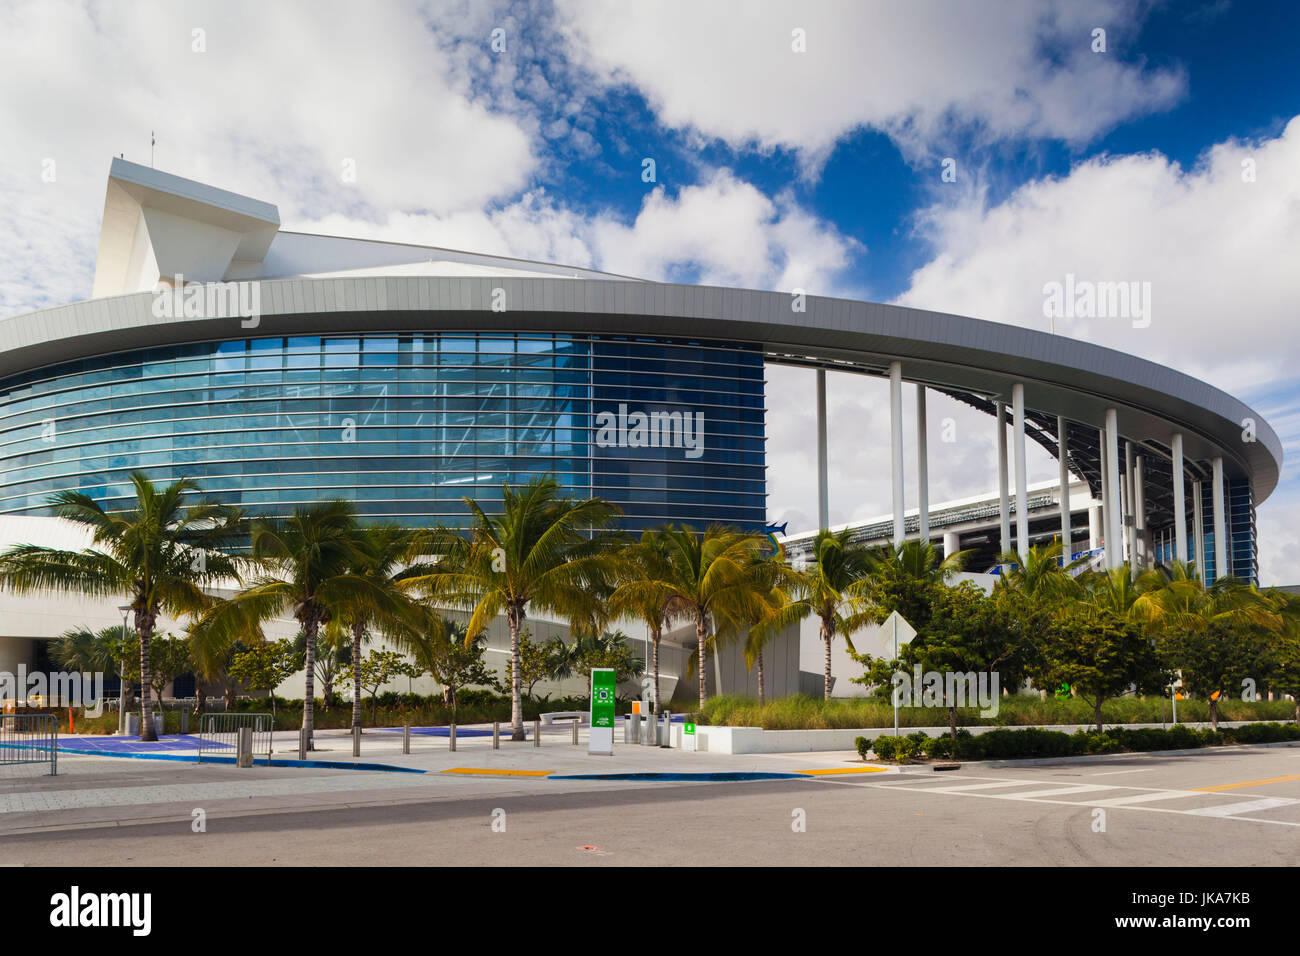 USA, Florida, Miami, New Marlins Ballpark, baseball stadium Stock Photo